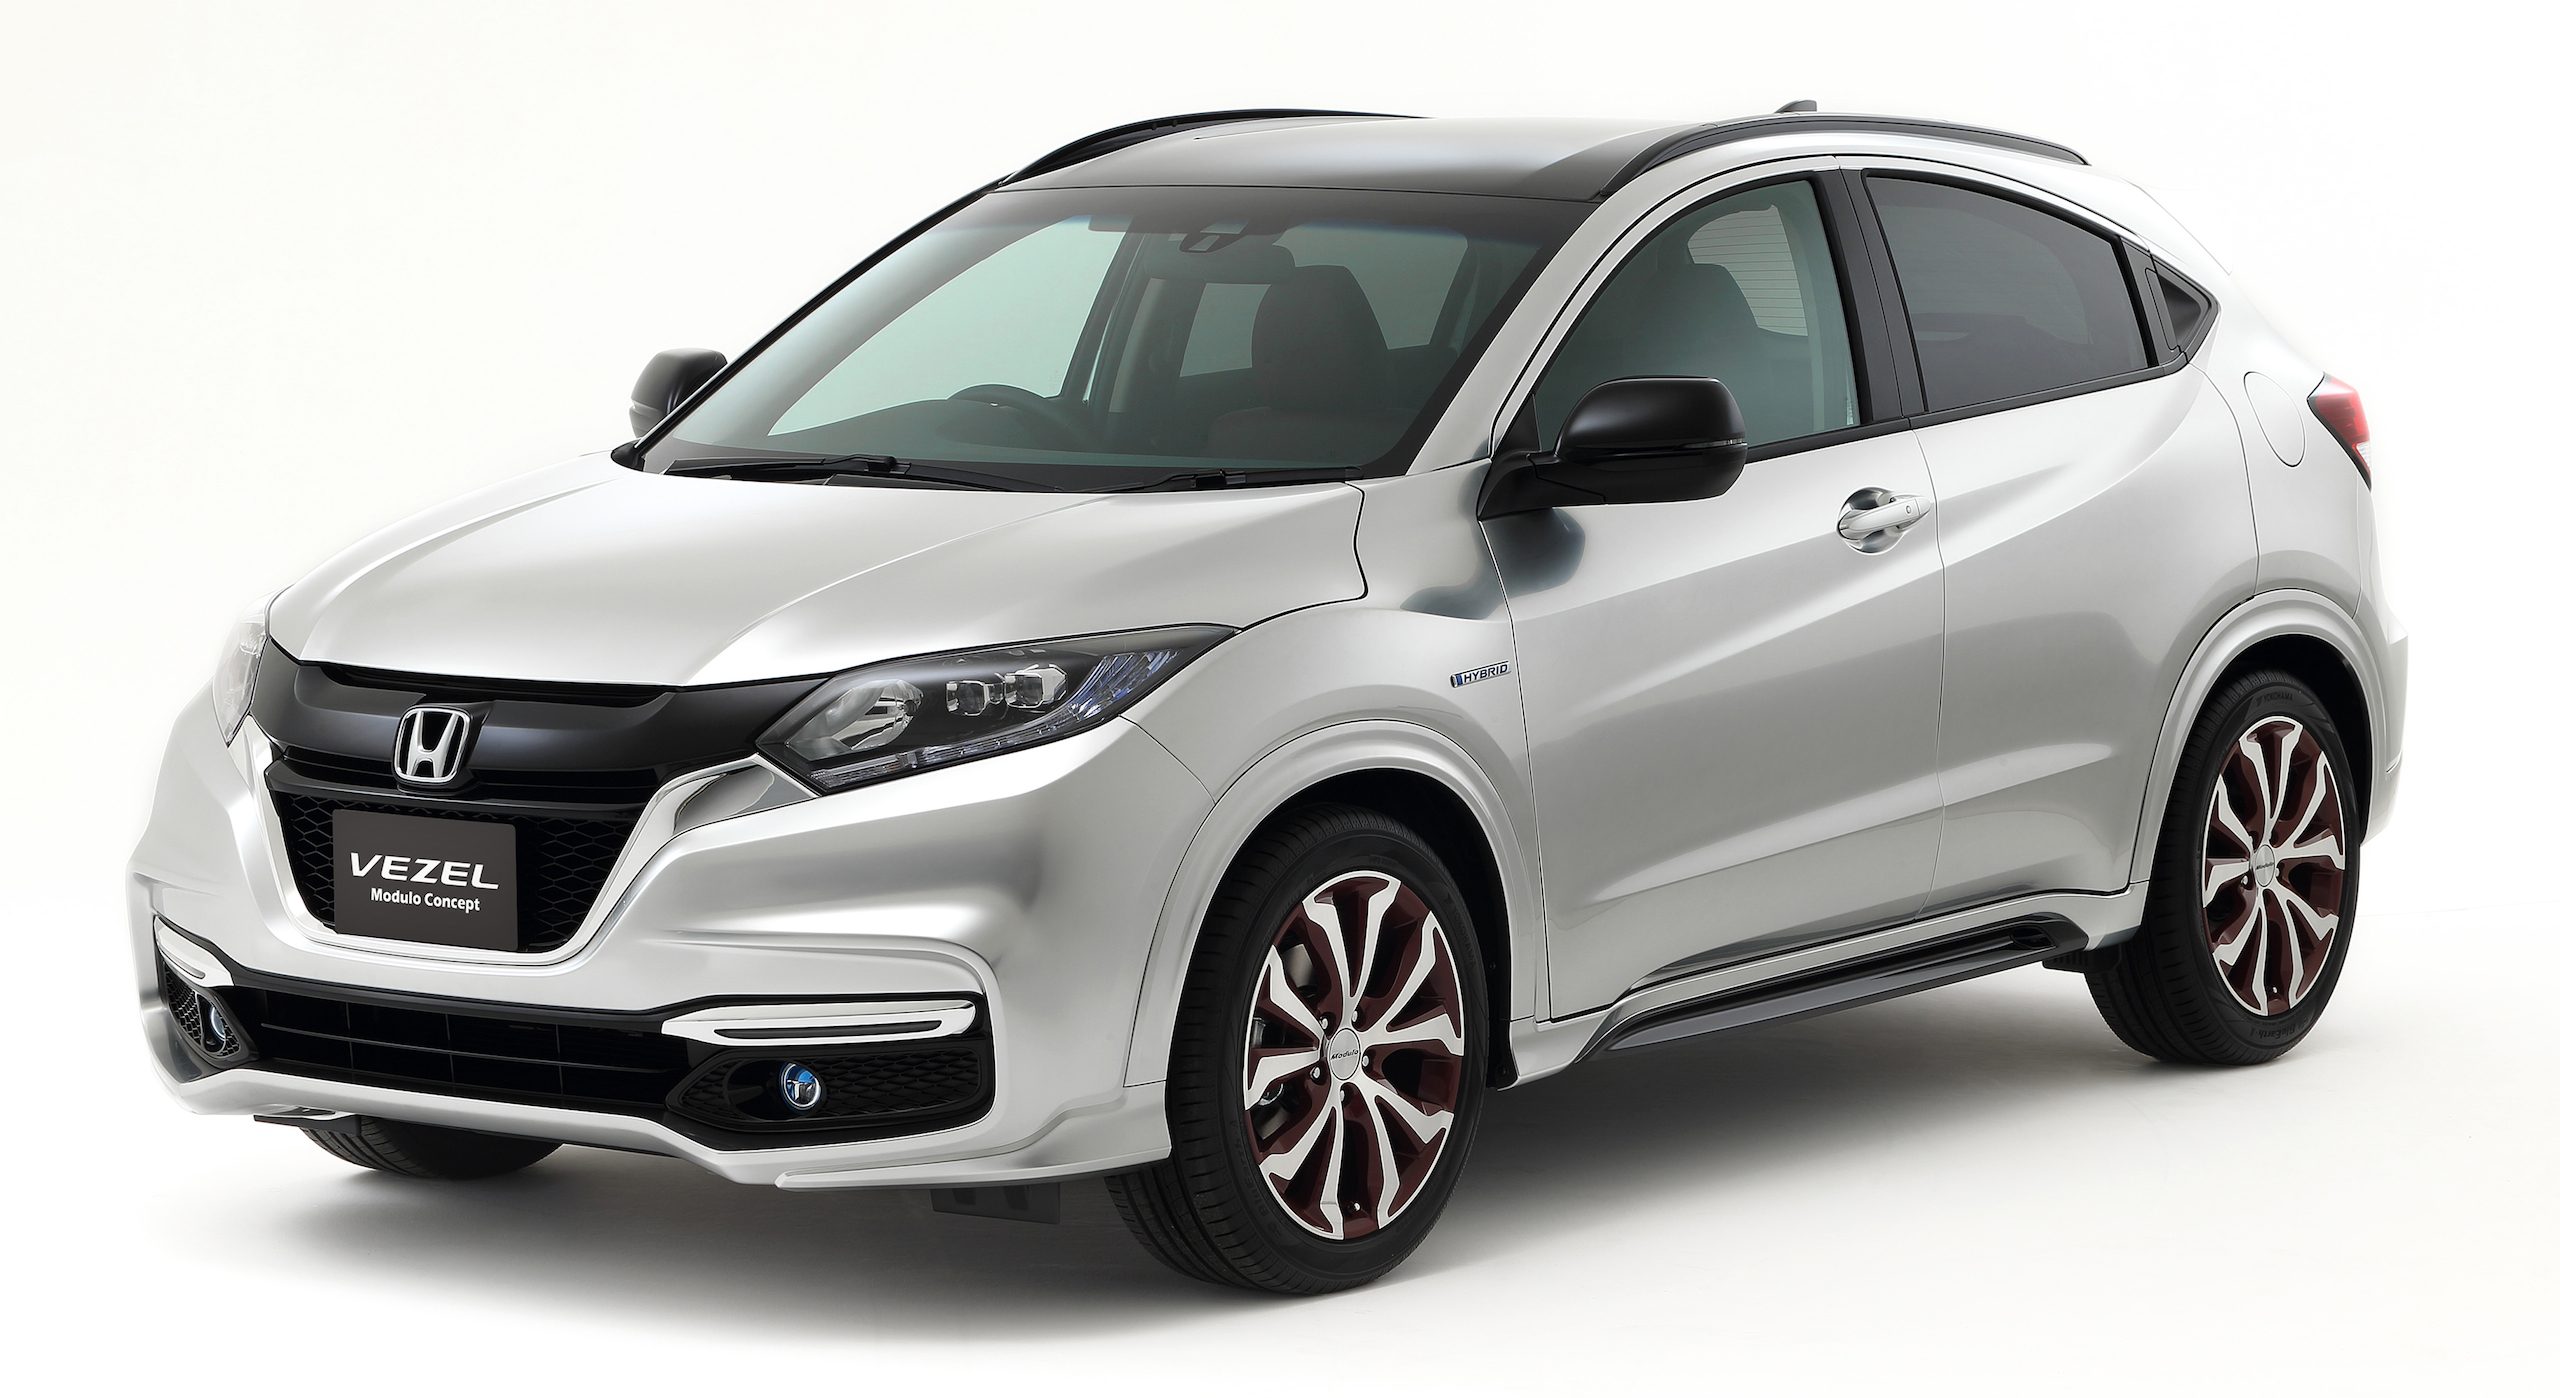 Tokyo Auto Salon 2014: Honda Vezel Modulo Concept